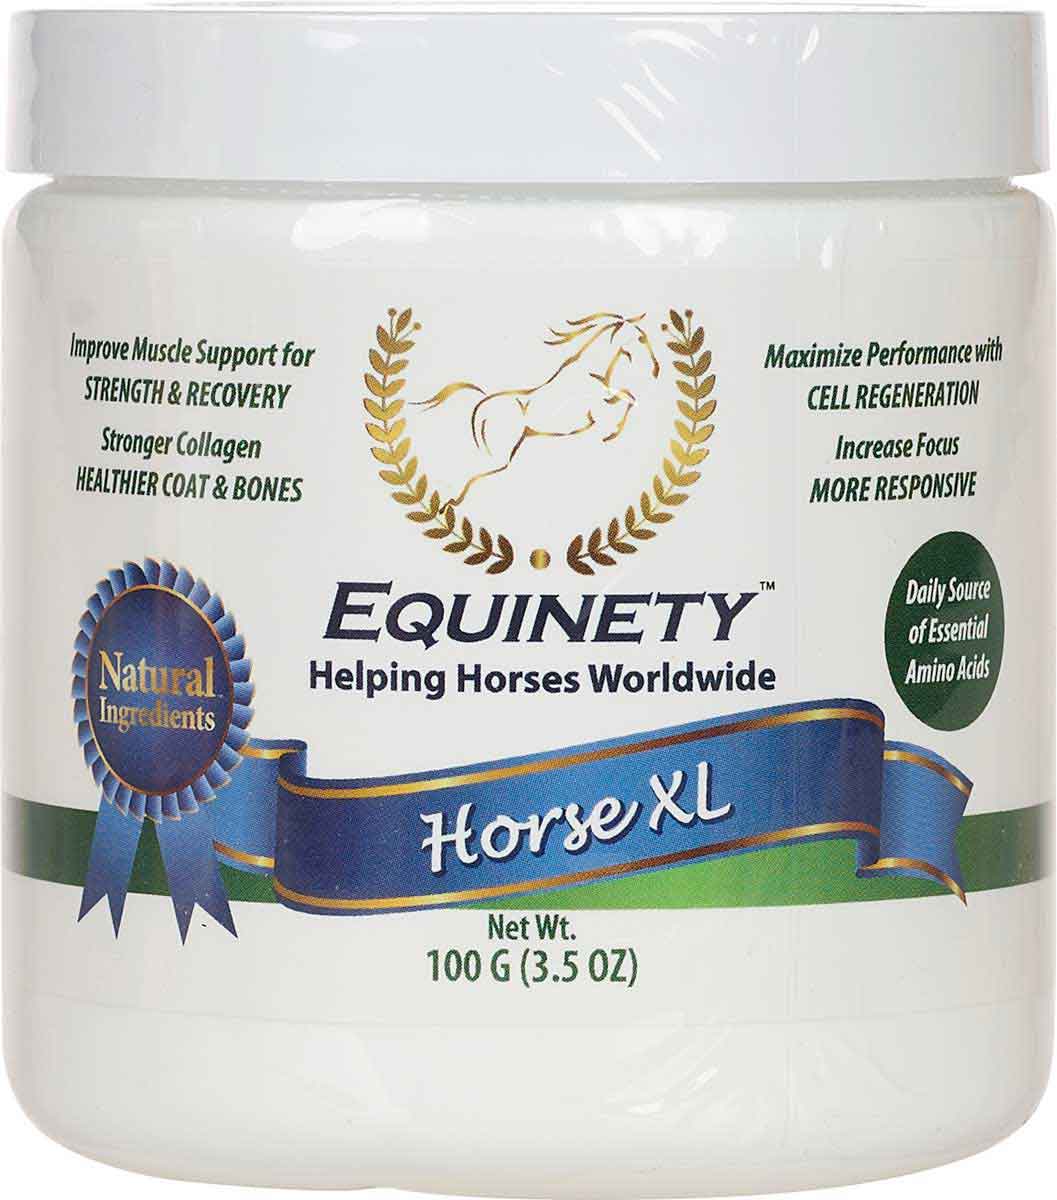 Equinety Horse XL Amino Acid Supplement 600g